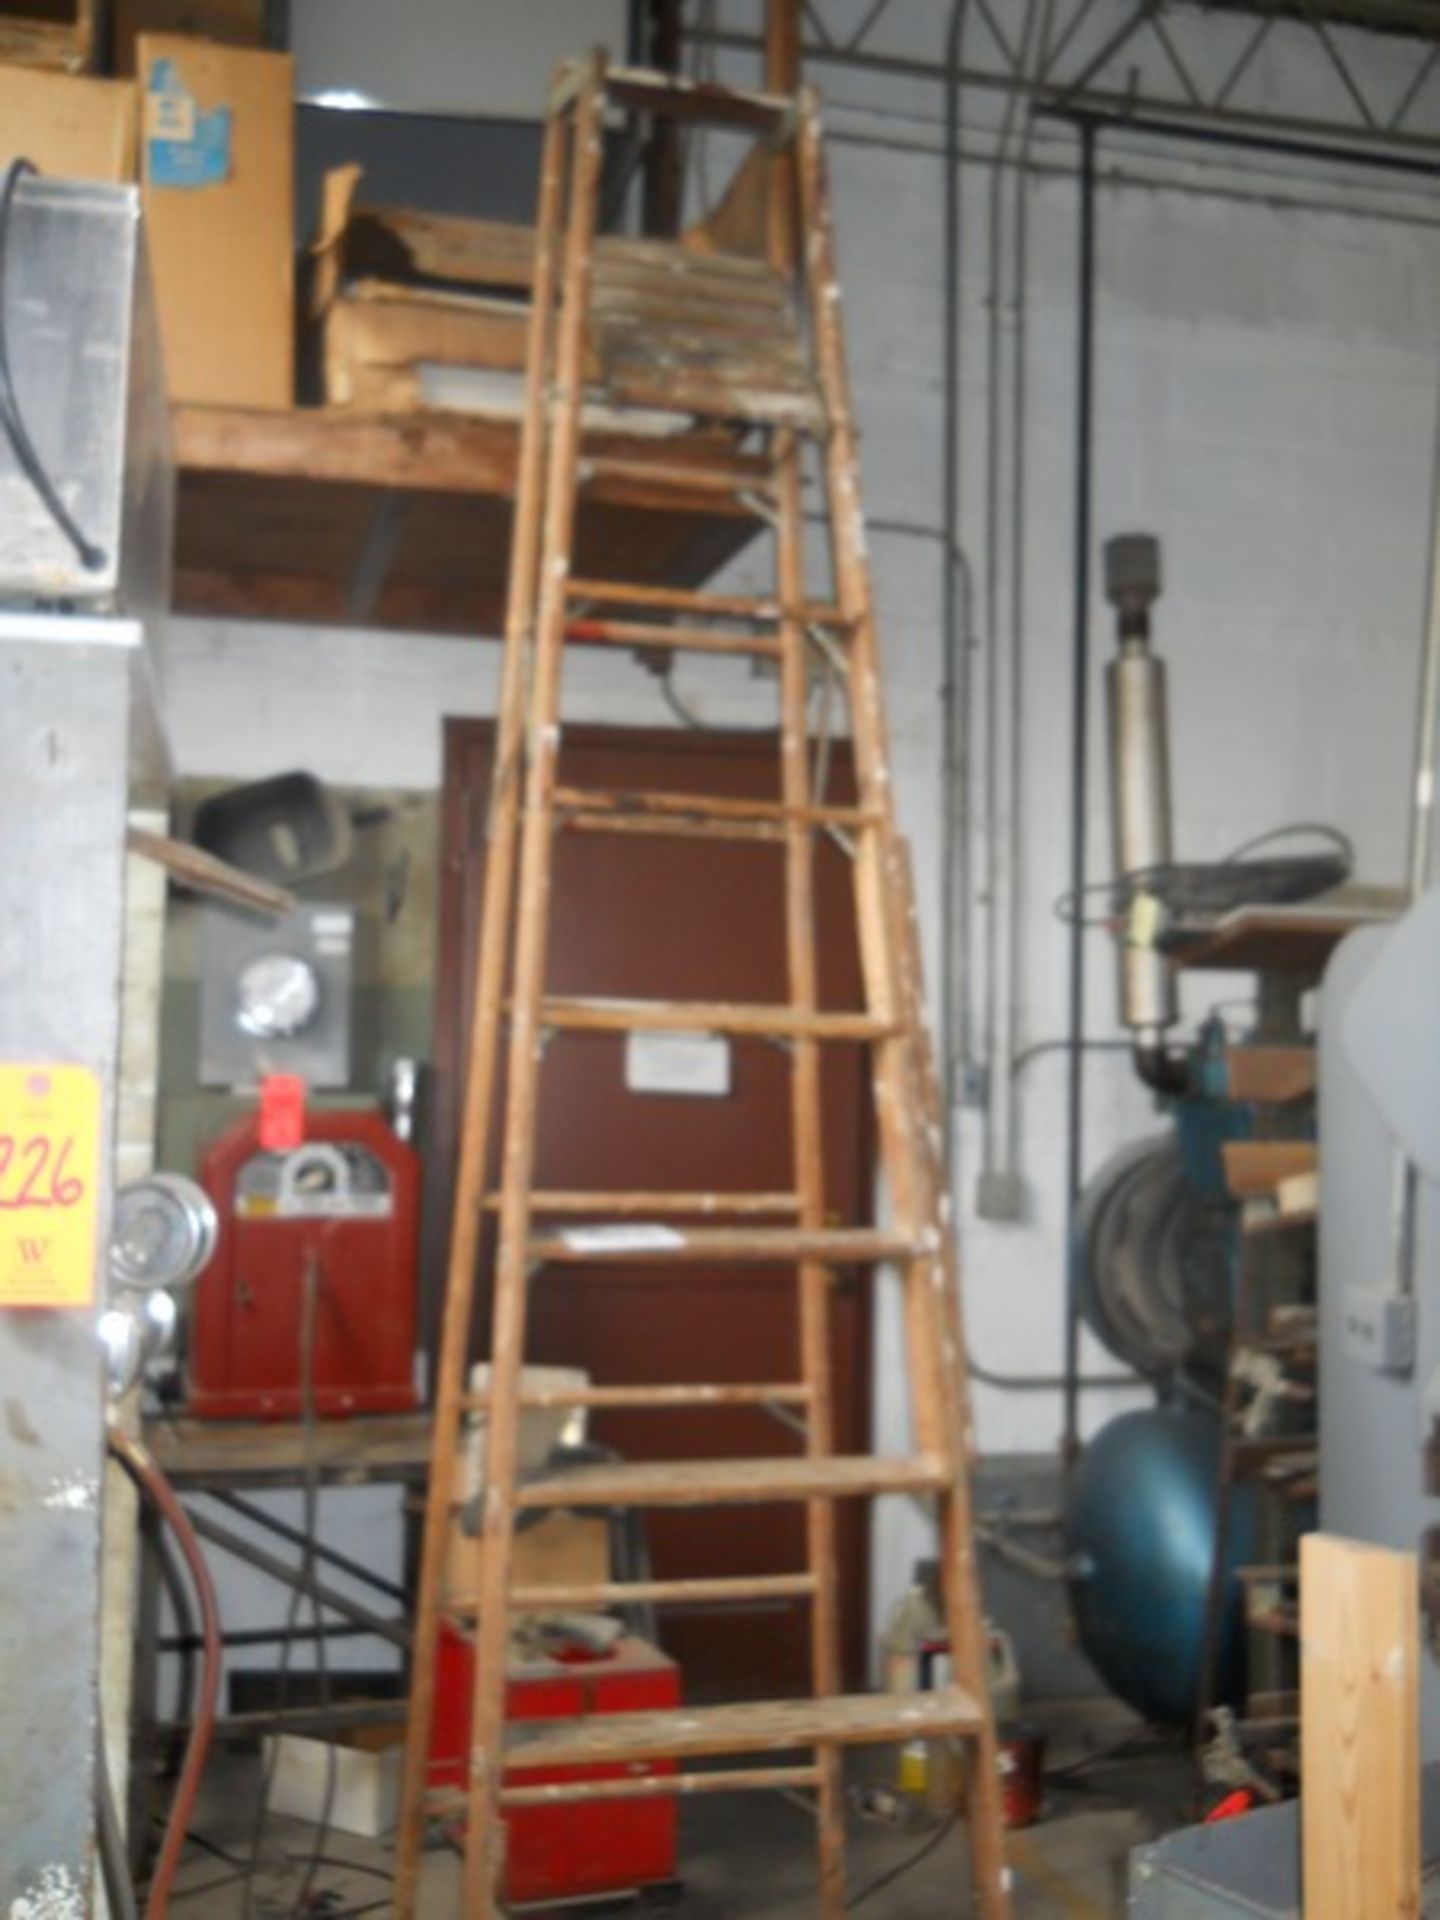 Shop Ladder